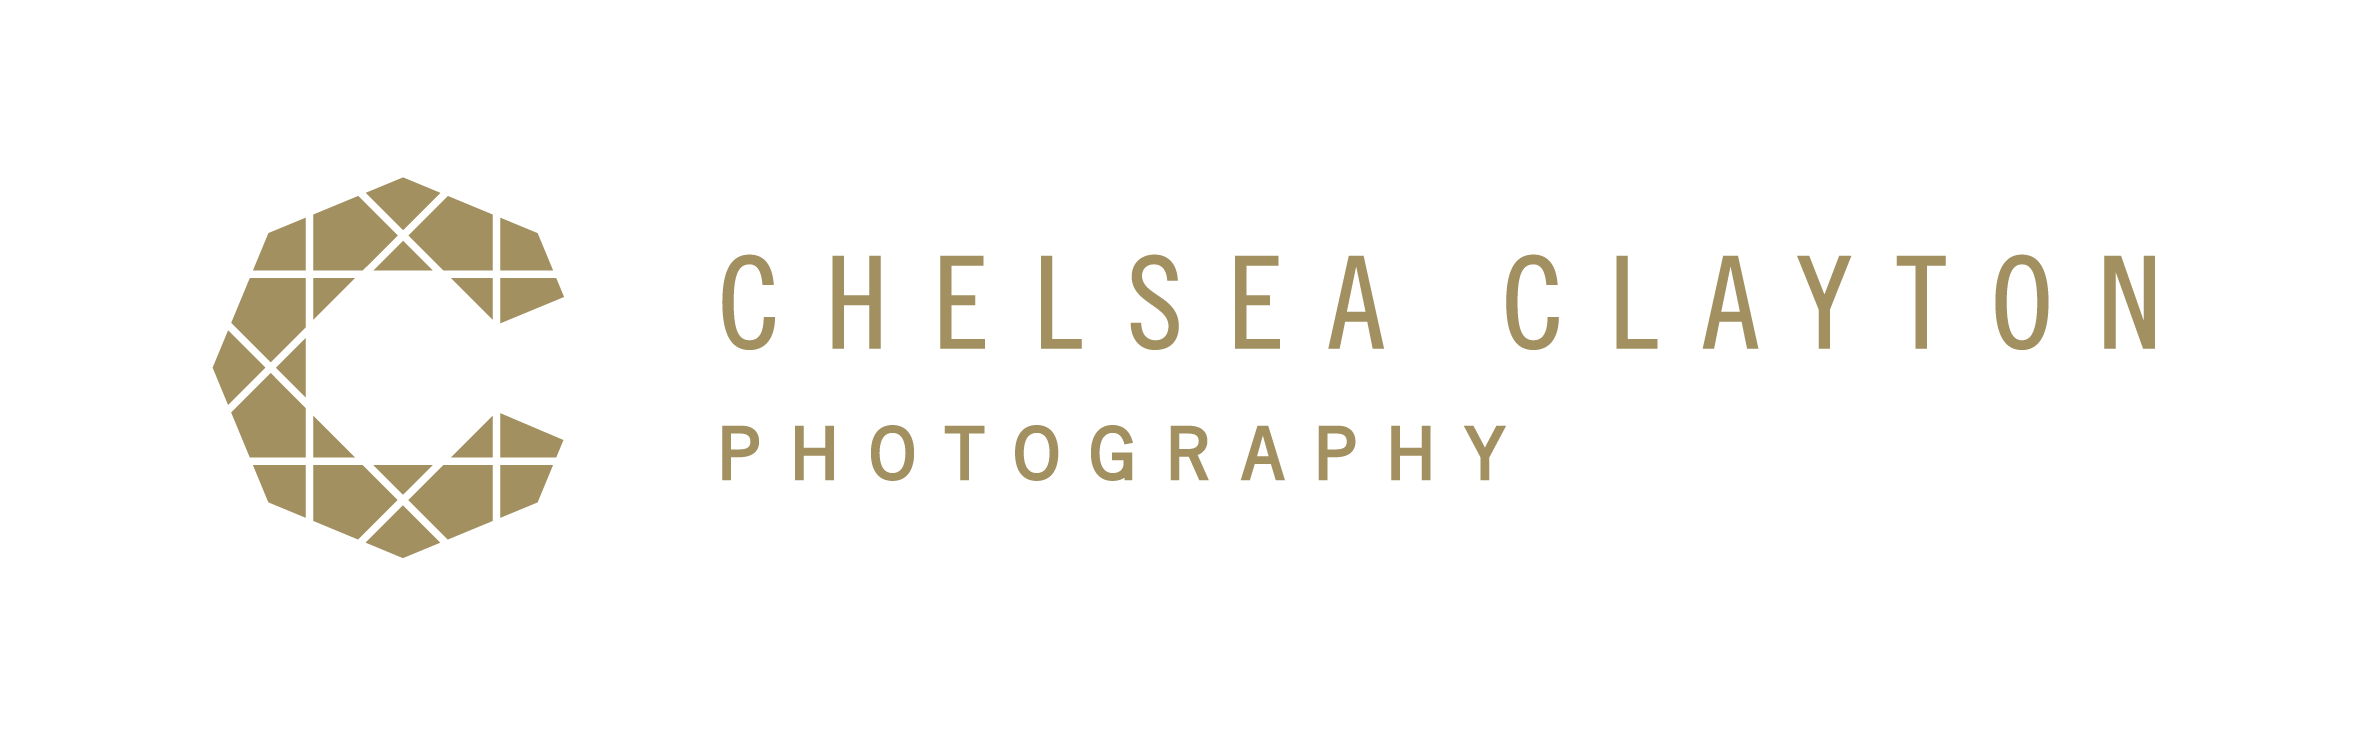 Chelsea Clayton Photography